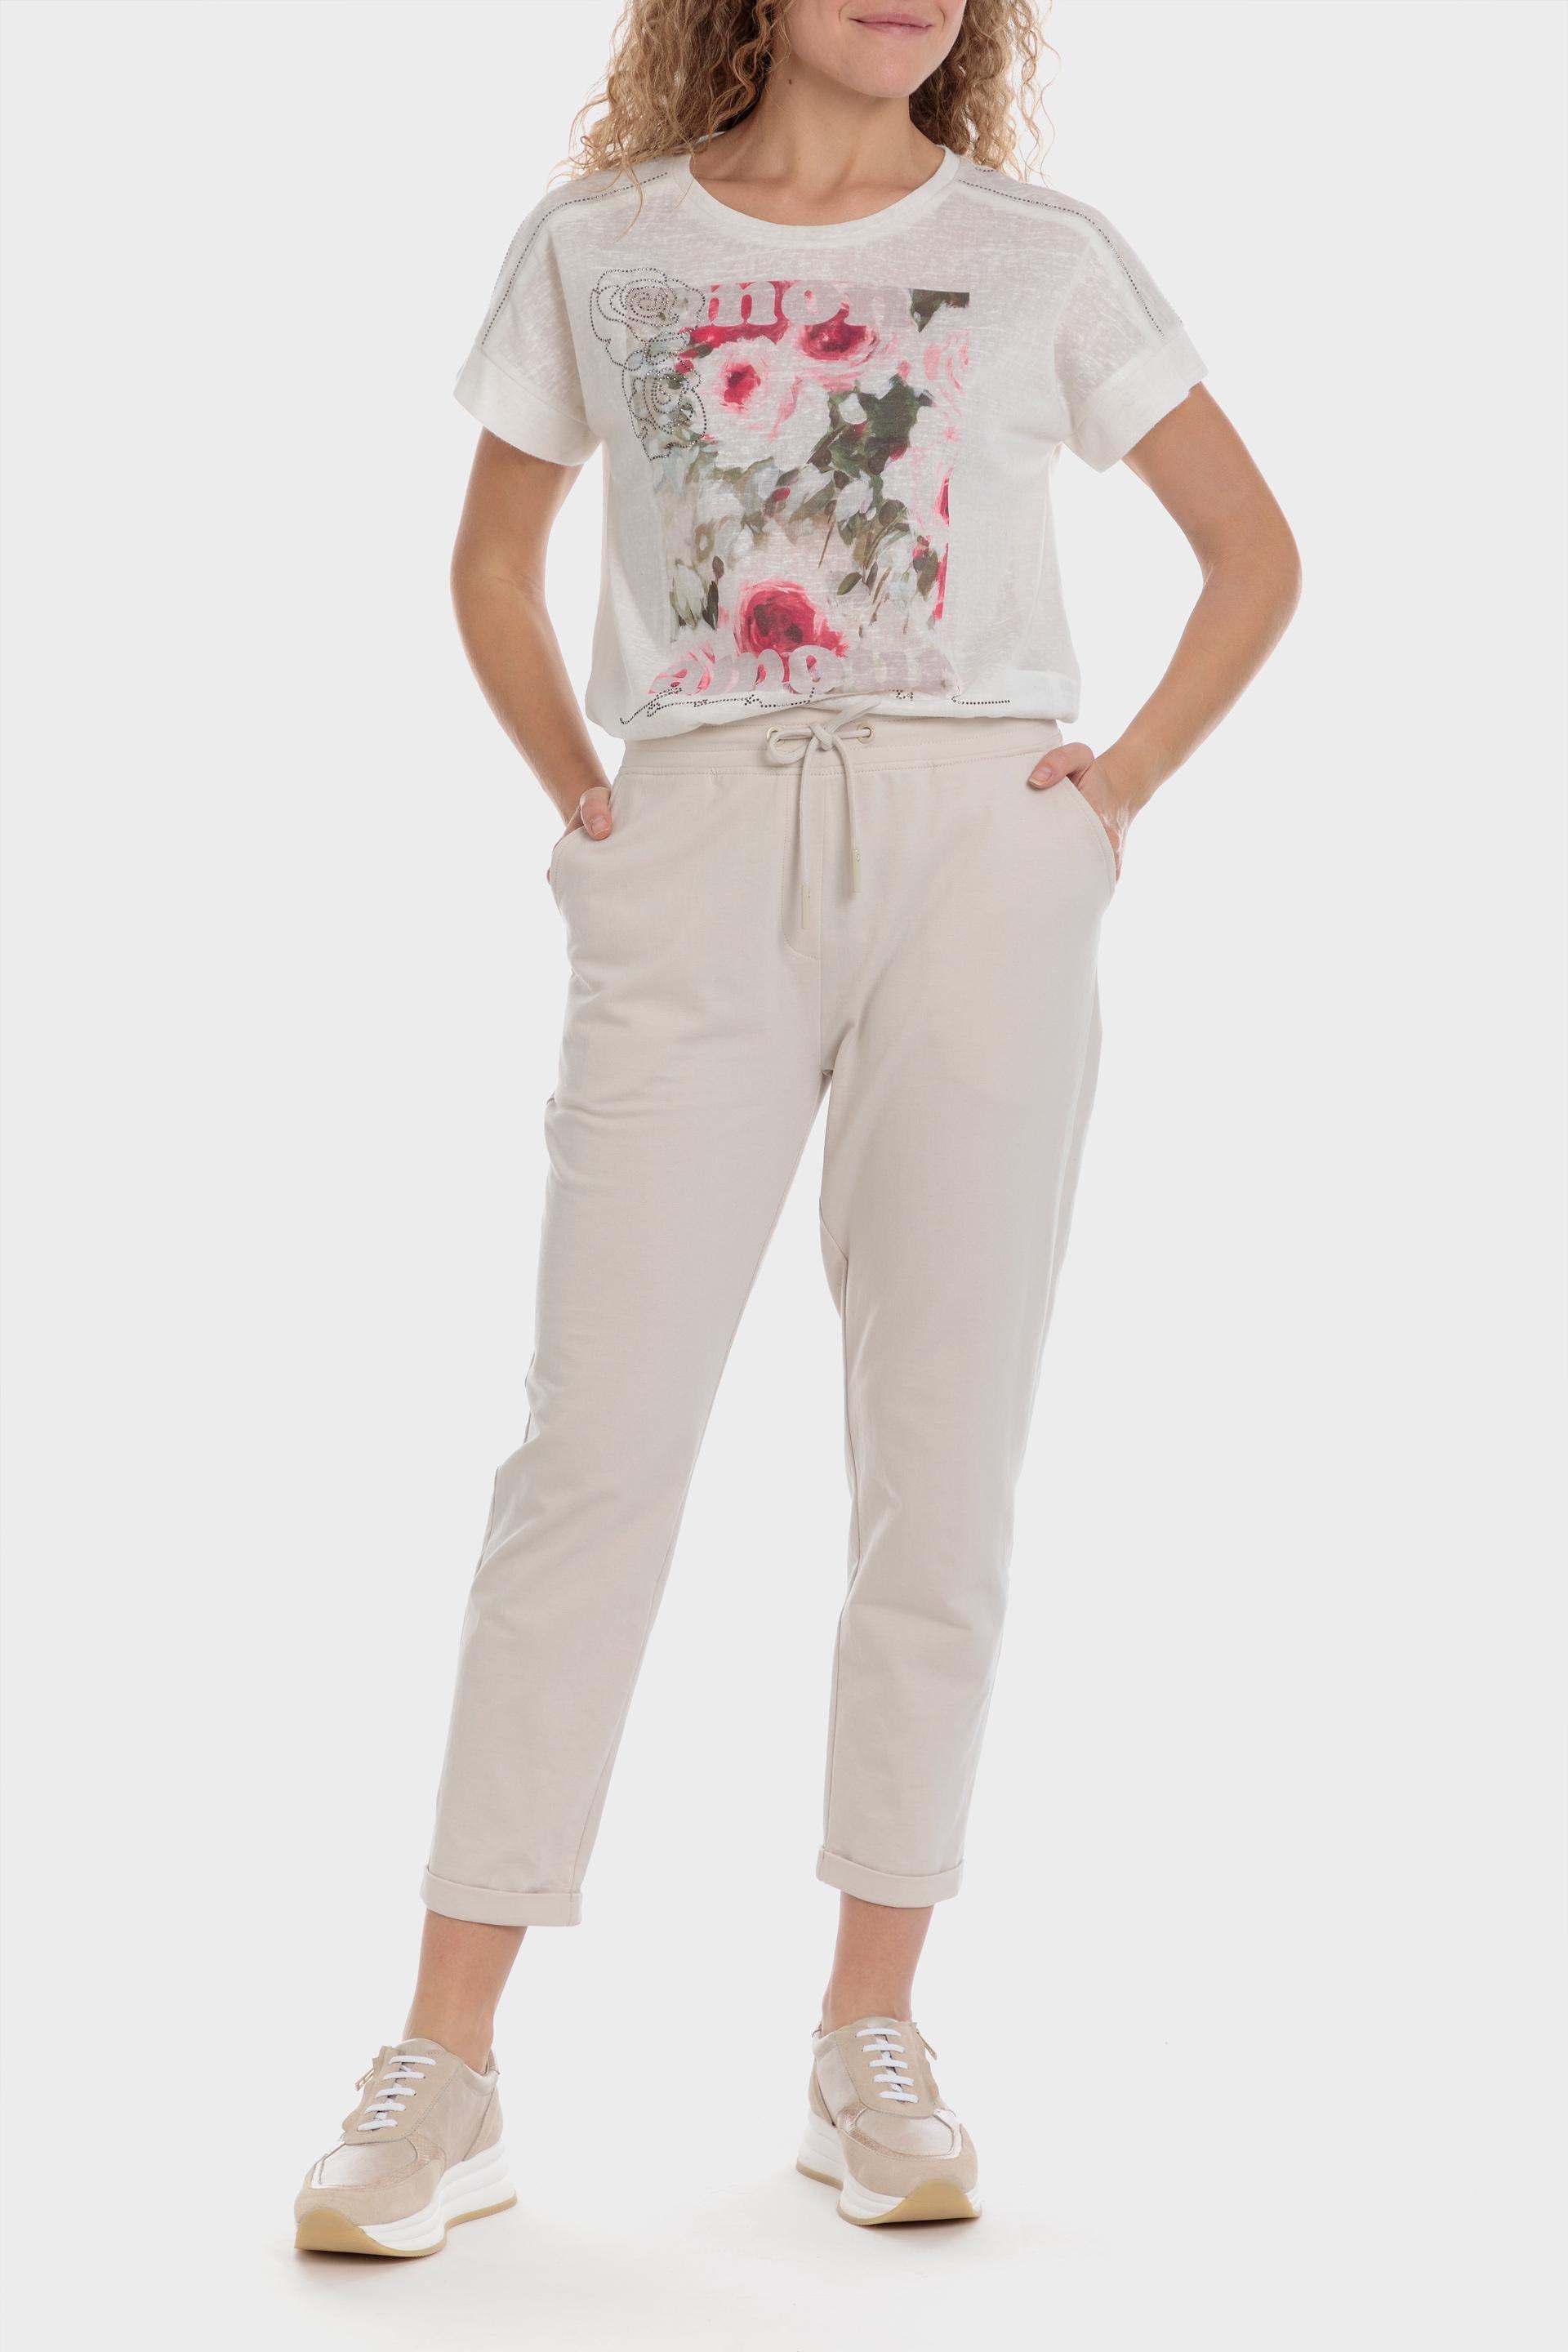 Punt Roma - White Floral Print T-Shirt